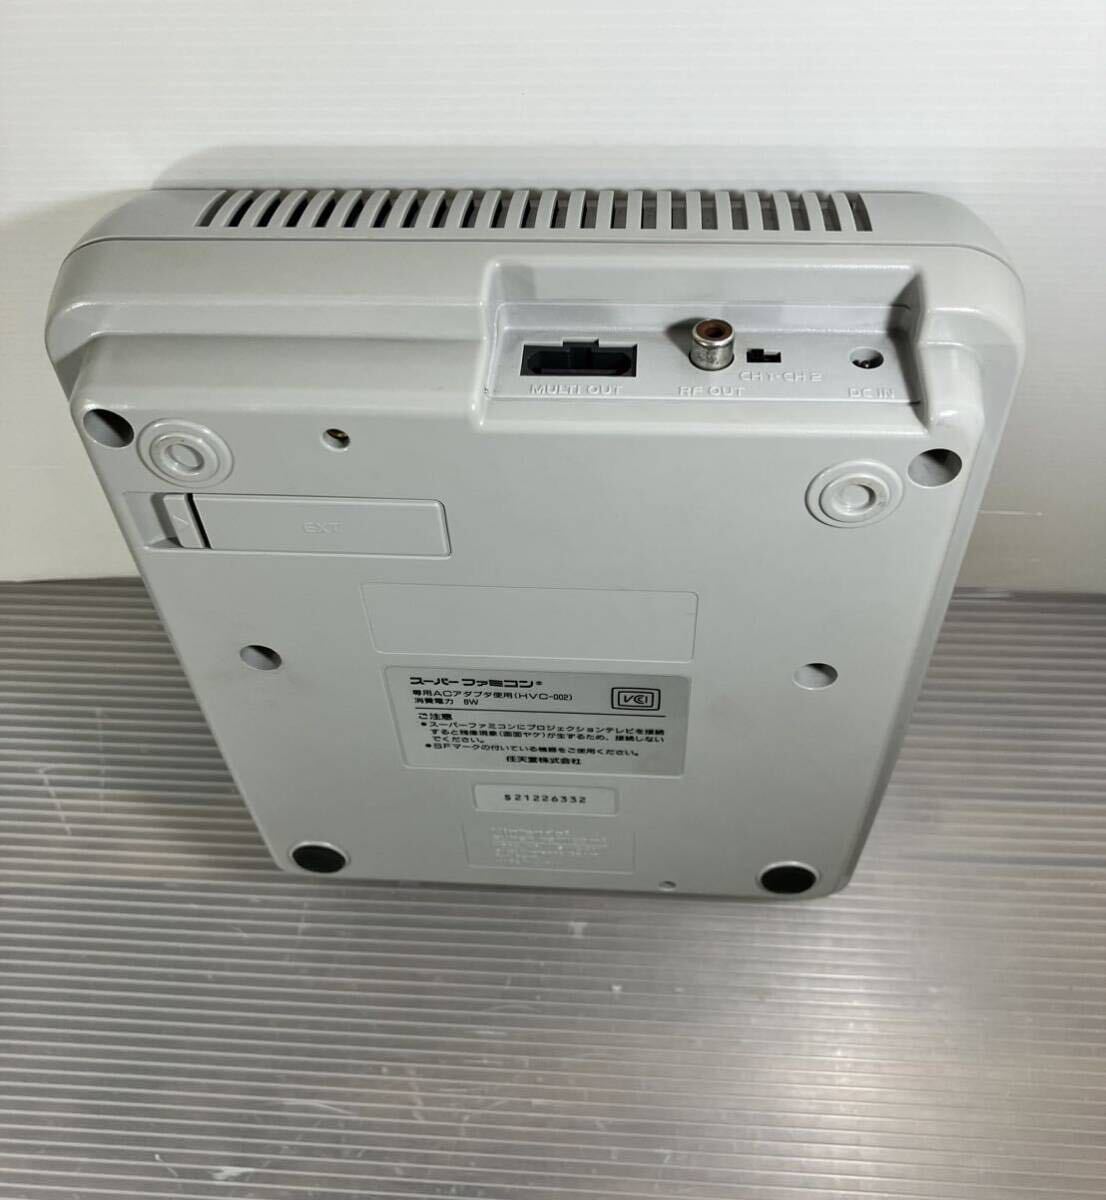 A-147 Super Famicom Nintendo box attaching box instructions attaching game machine operation verification settled 